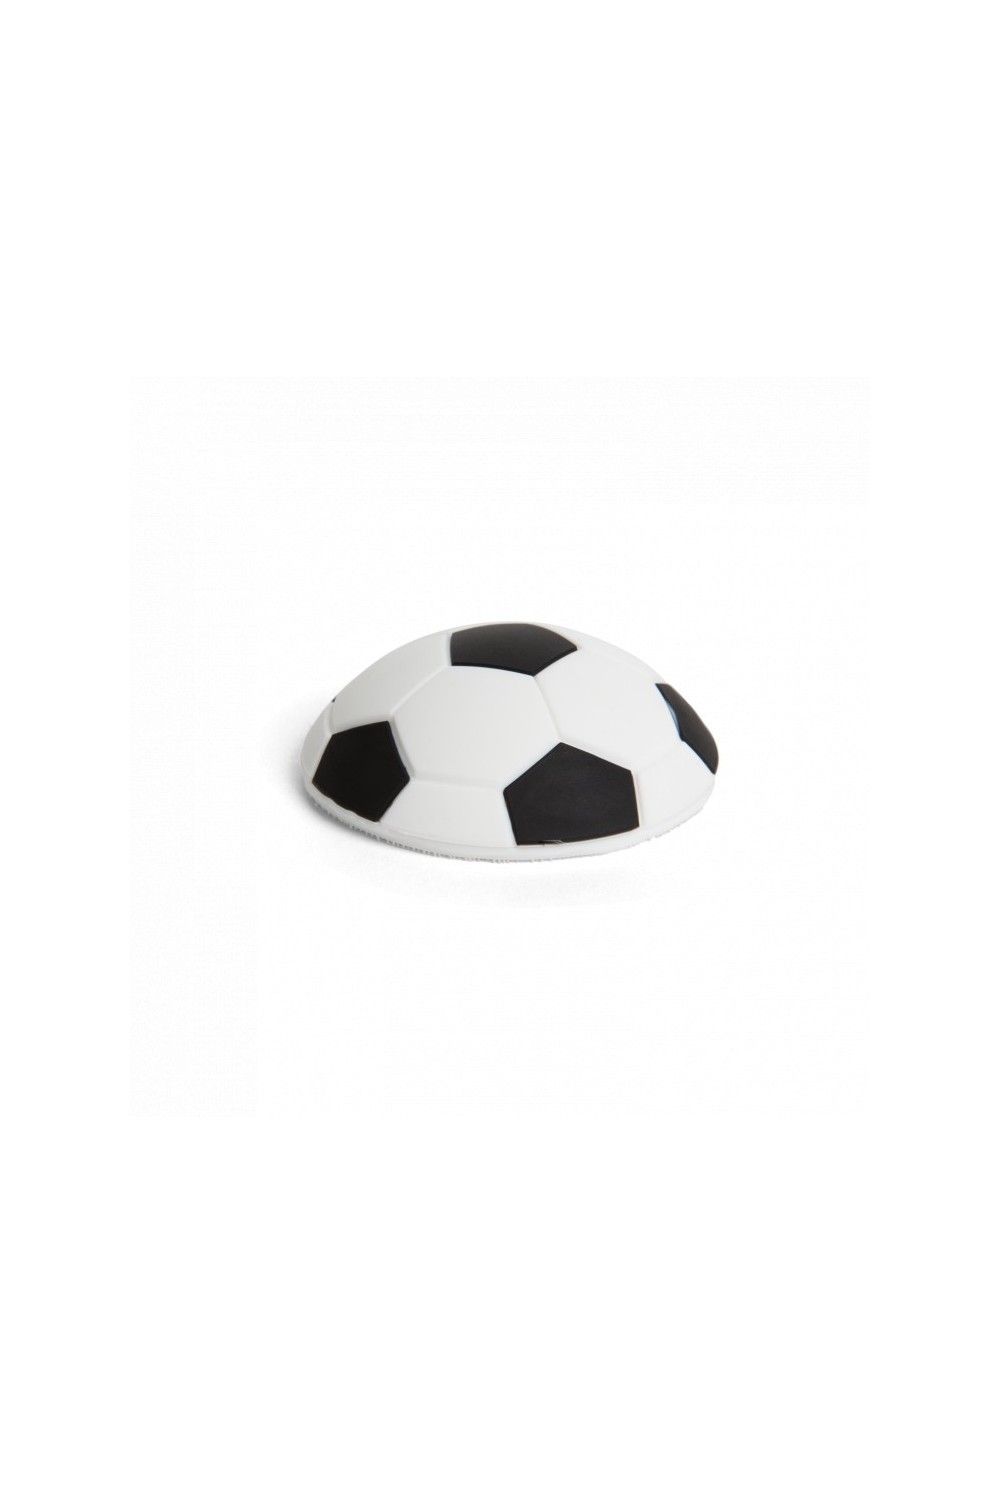 Klettie-Set ergobag 5 pieces Soccer (inkl. 3D Klettie)